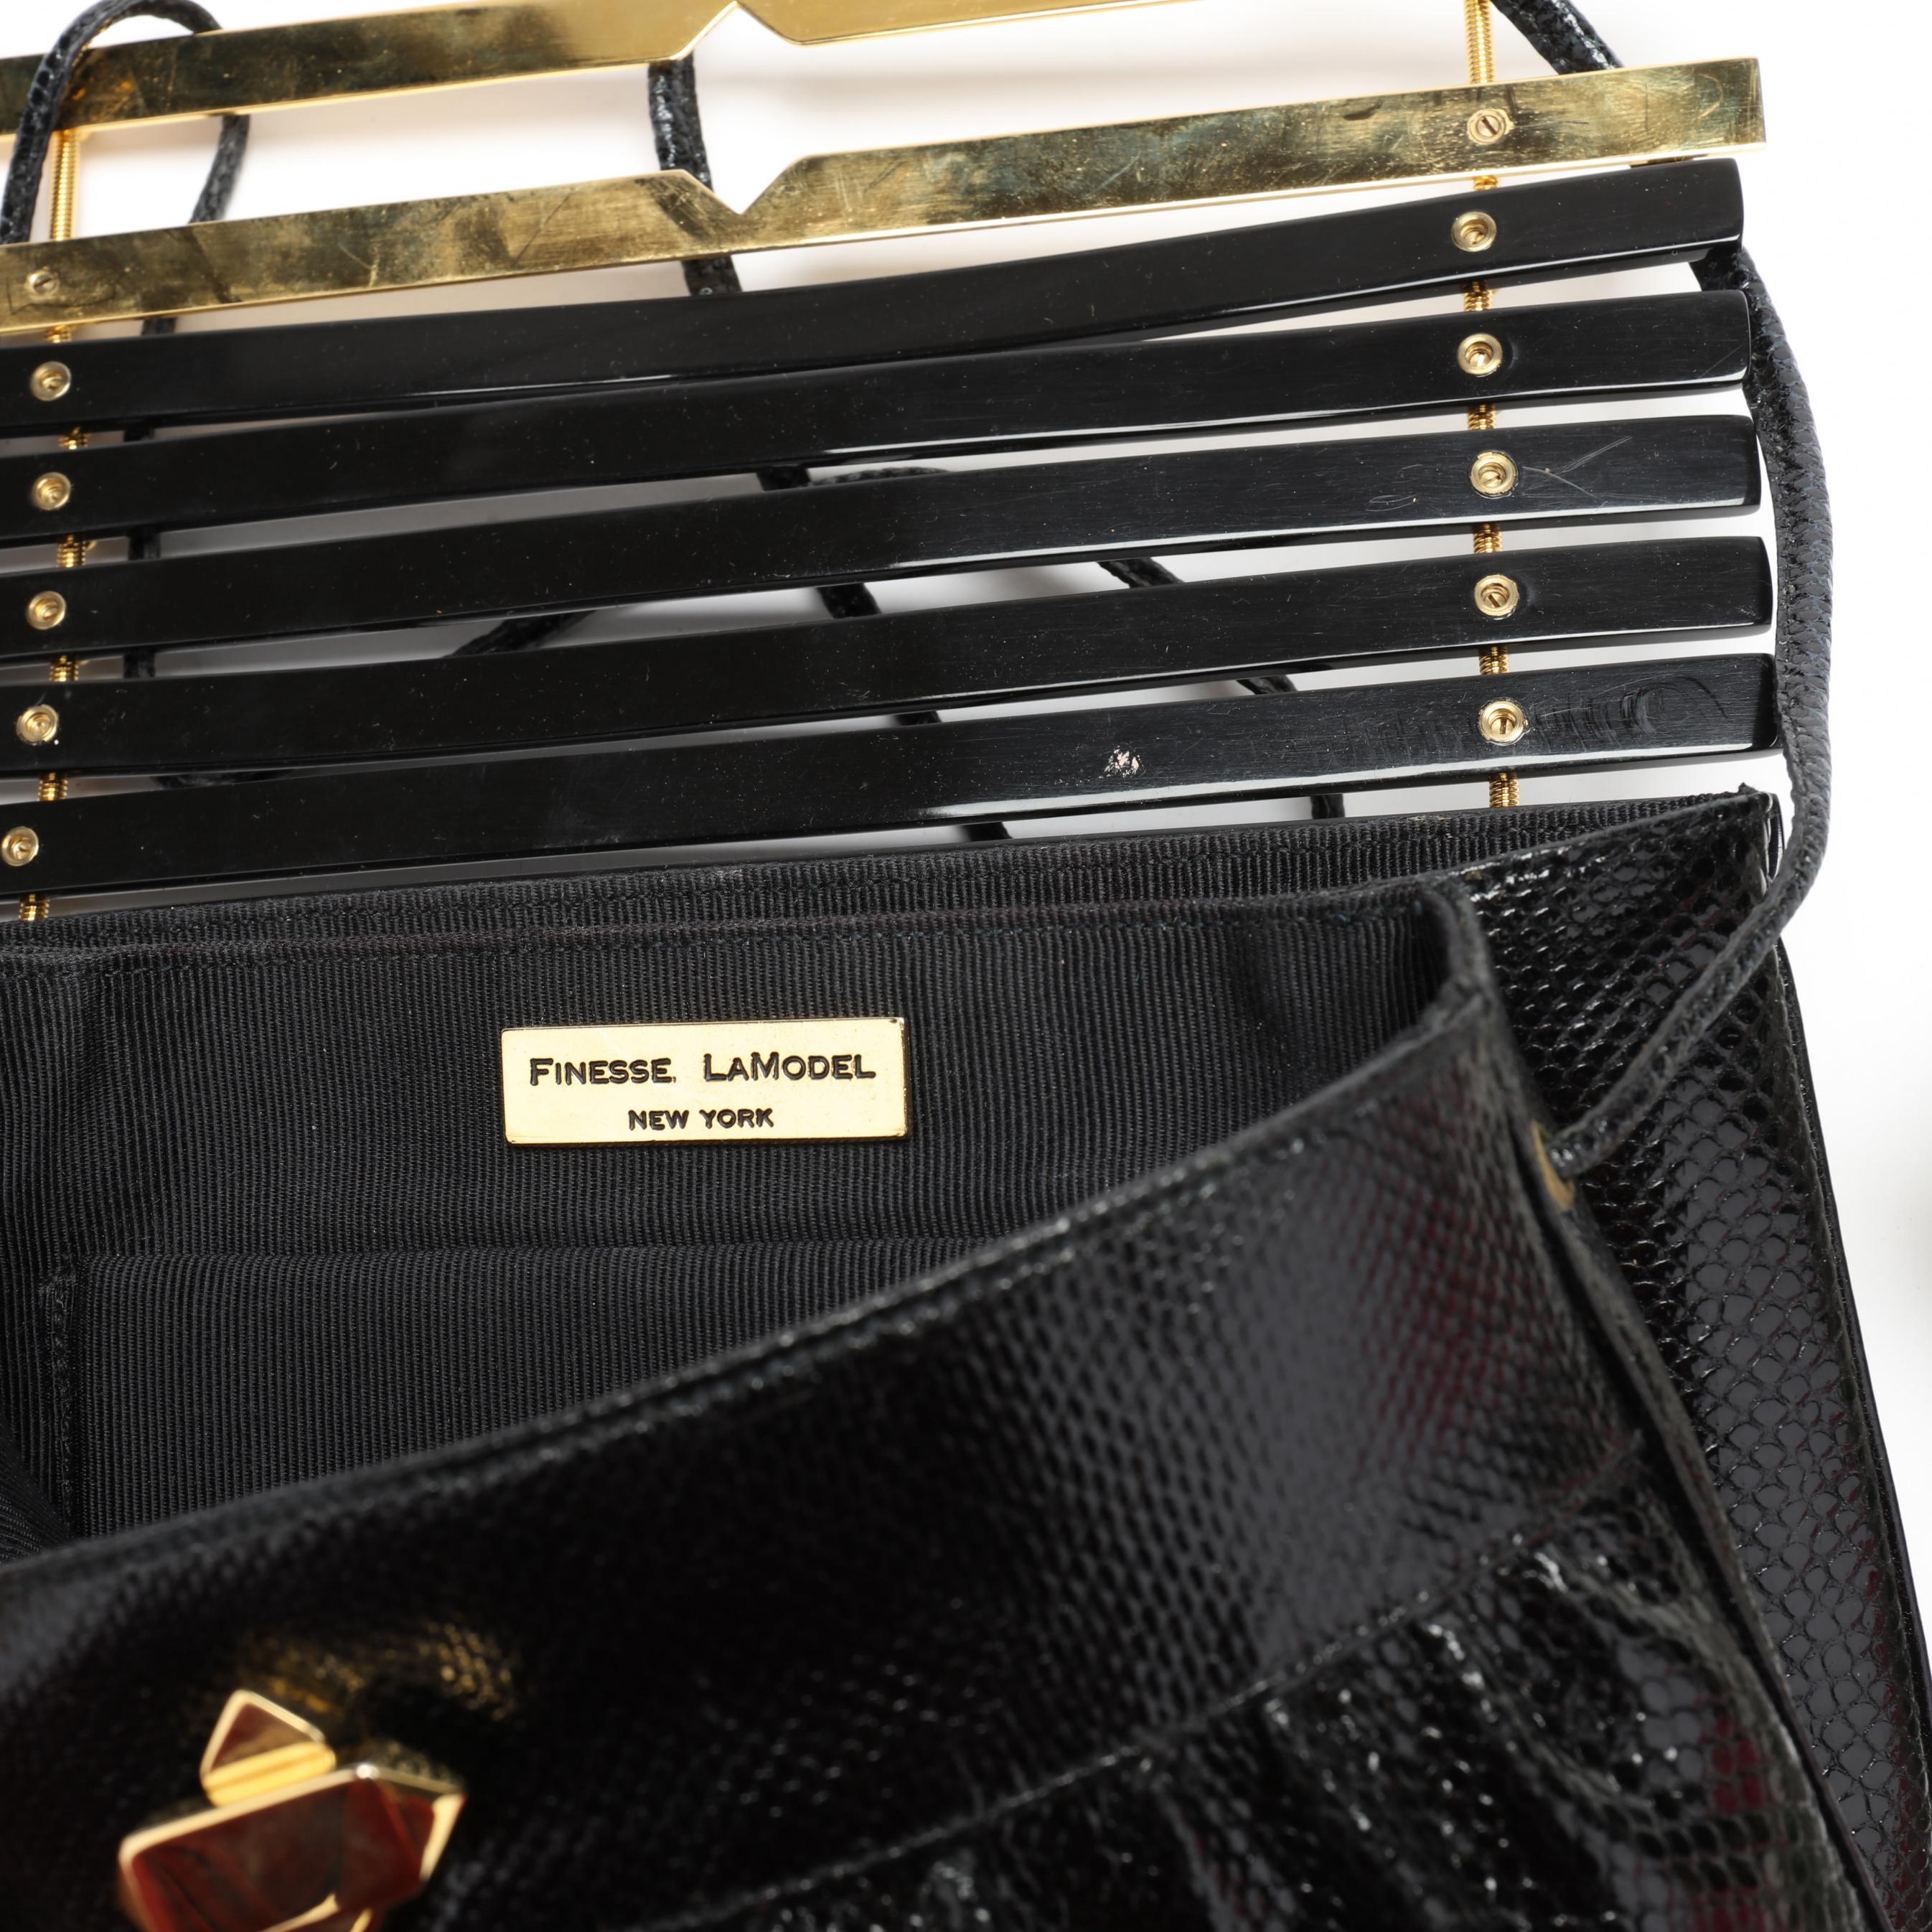 A Selection of Seven Vintage Designer Handbags (Lot 1230 - Winter Estate  AuctionFeb 2, 2023, 9:00am)